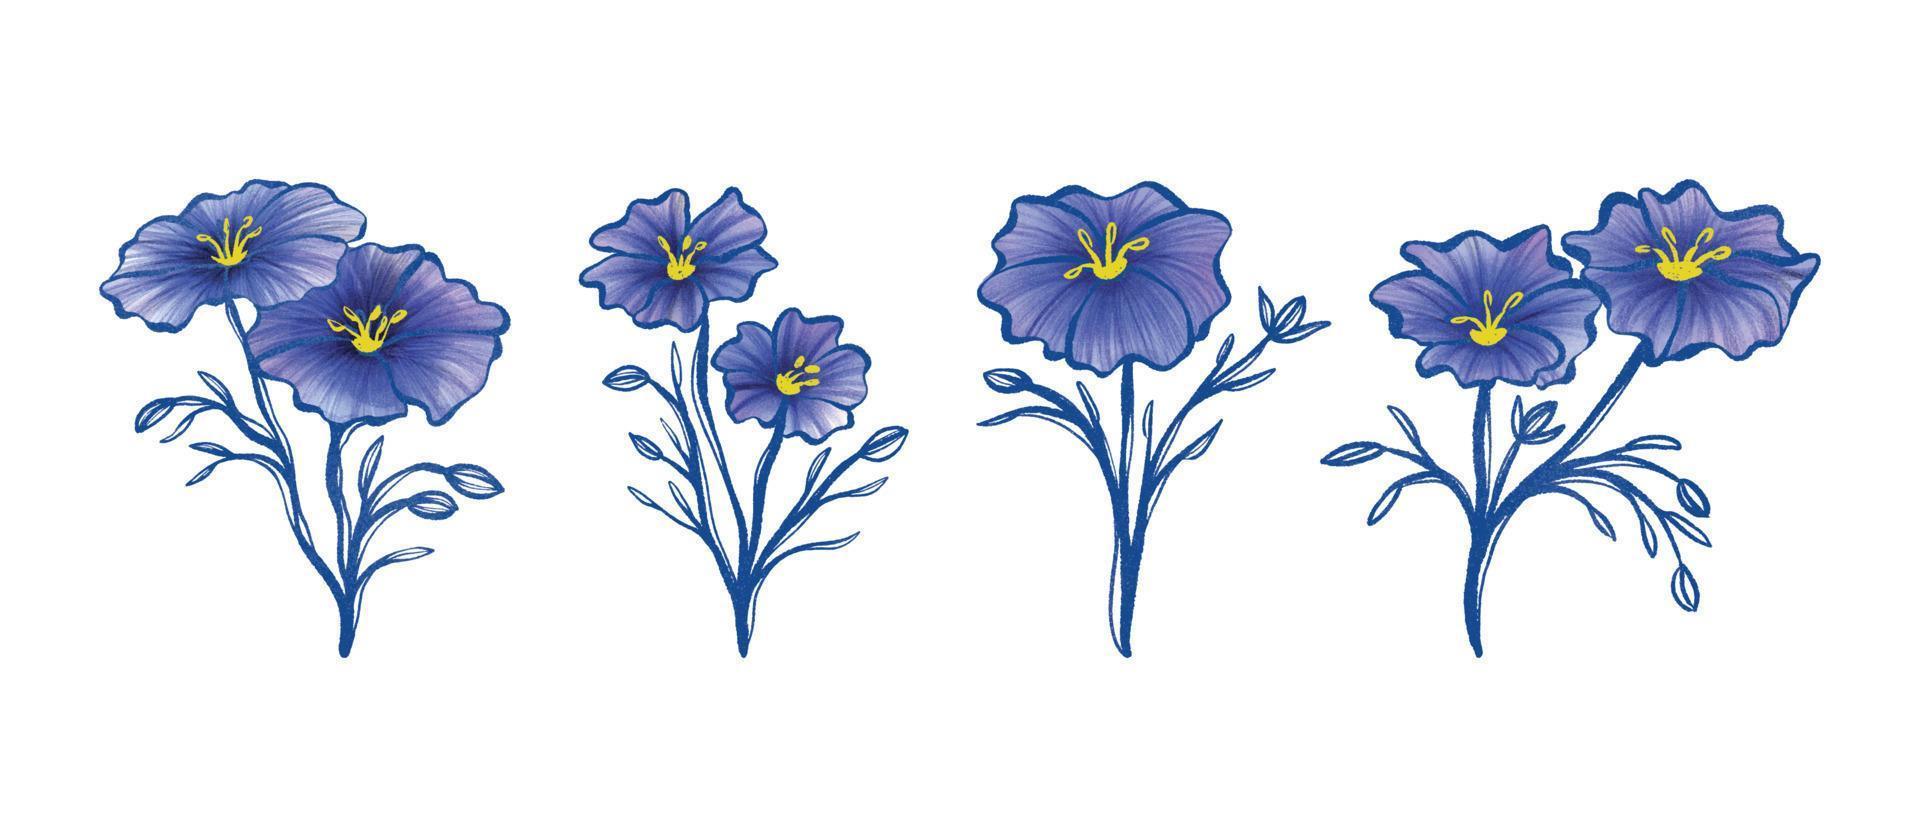 ensemble de fleurs de lin bleu dessinés à la main aquarelle clip art graphiques vectoriels 01 vecteur